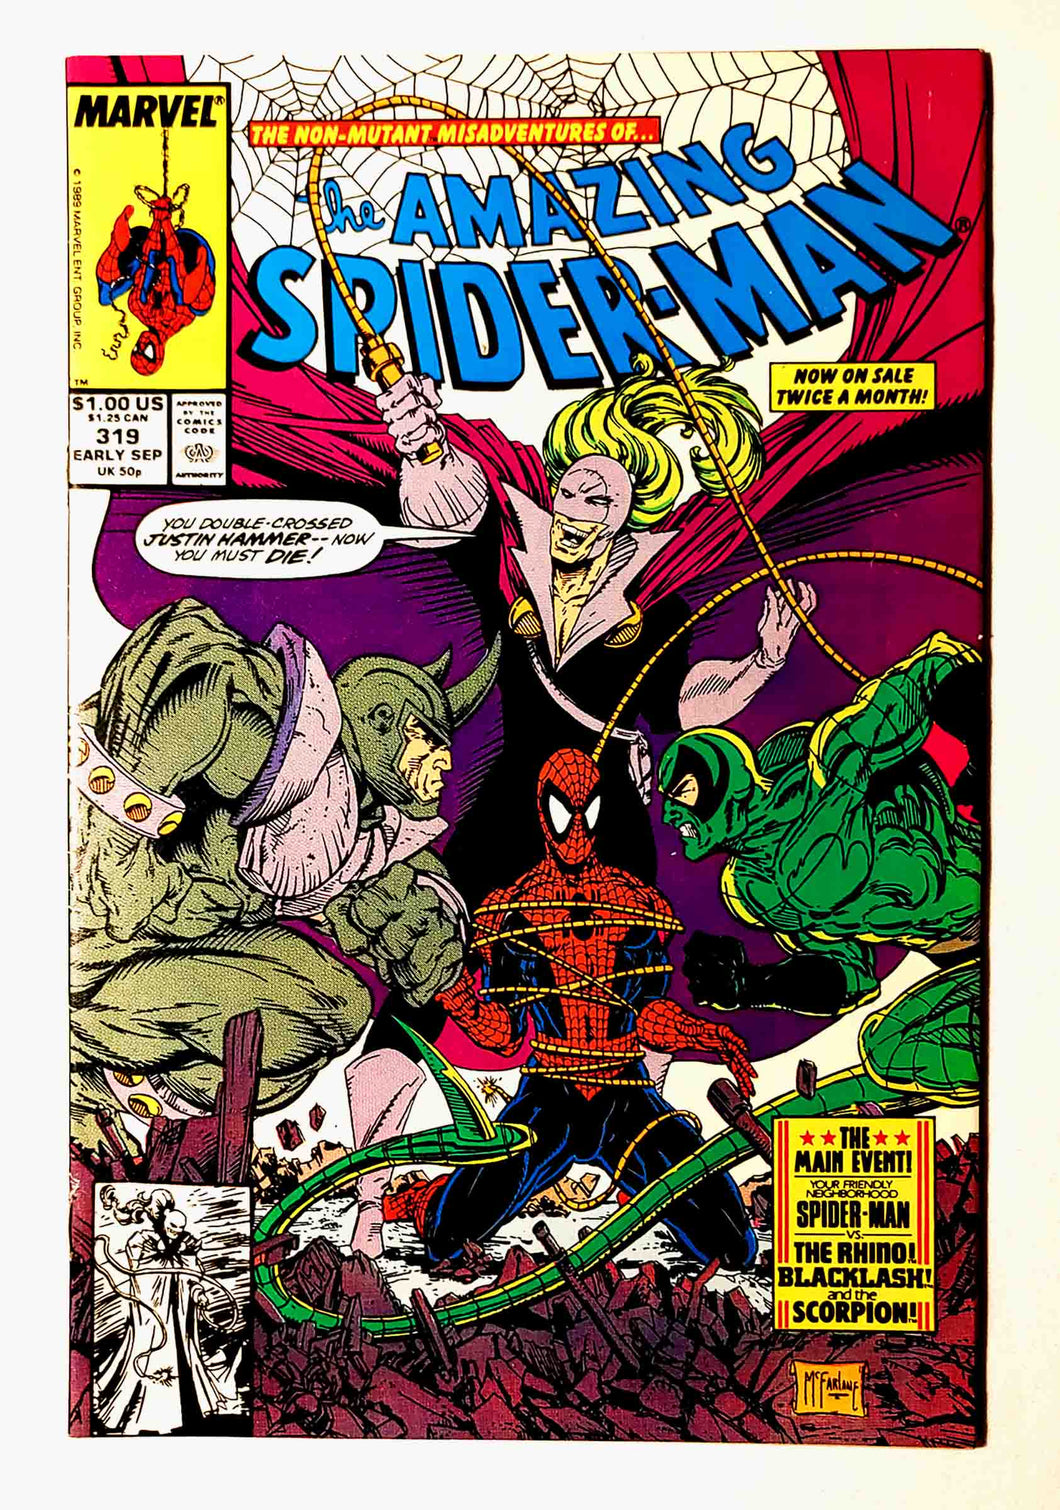 Comic Book Superhero - Marvel Comics:  Amazing Spiderman - Issue #319 - The Scorpion's Tail Of Woe / Part 2 Of 2 - Todd McFarlane - NM - High-Grade - Mary Jane Watson / Harry Osborn / Liz Osborn